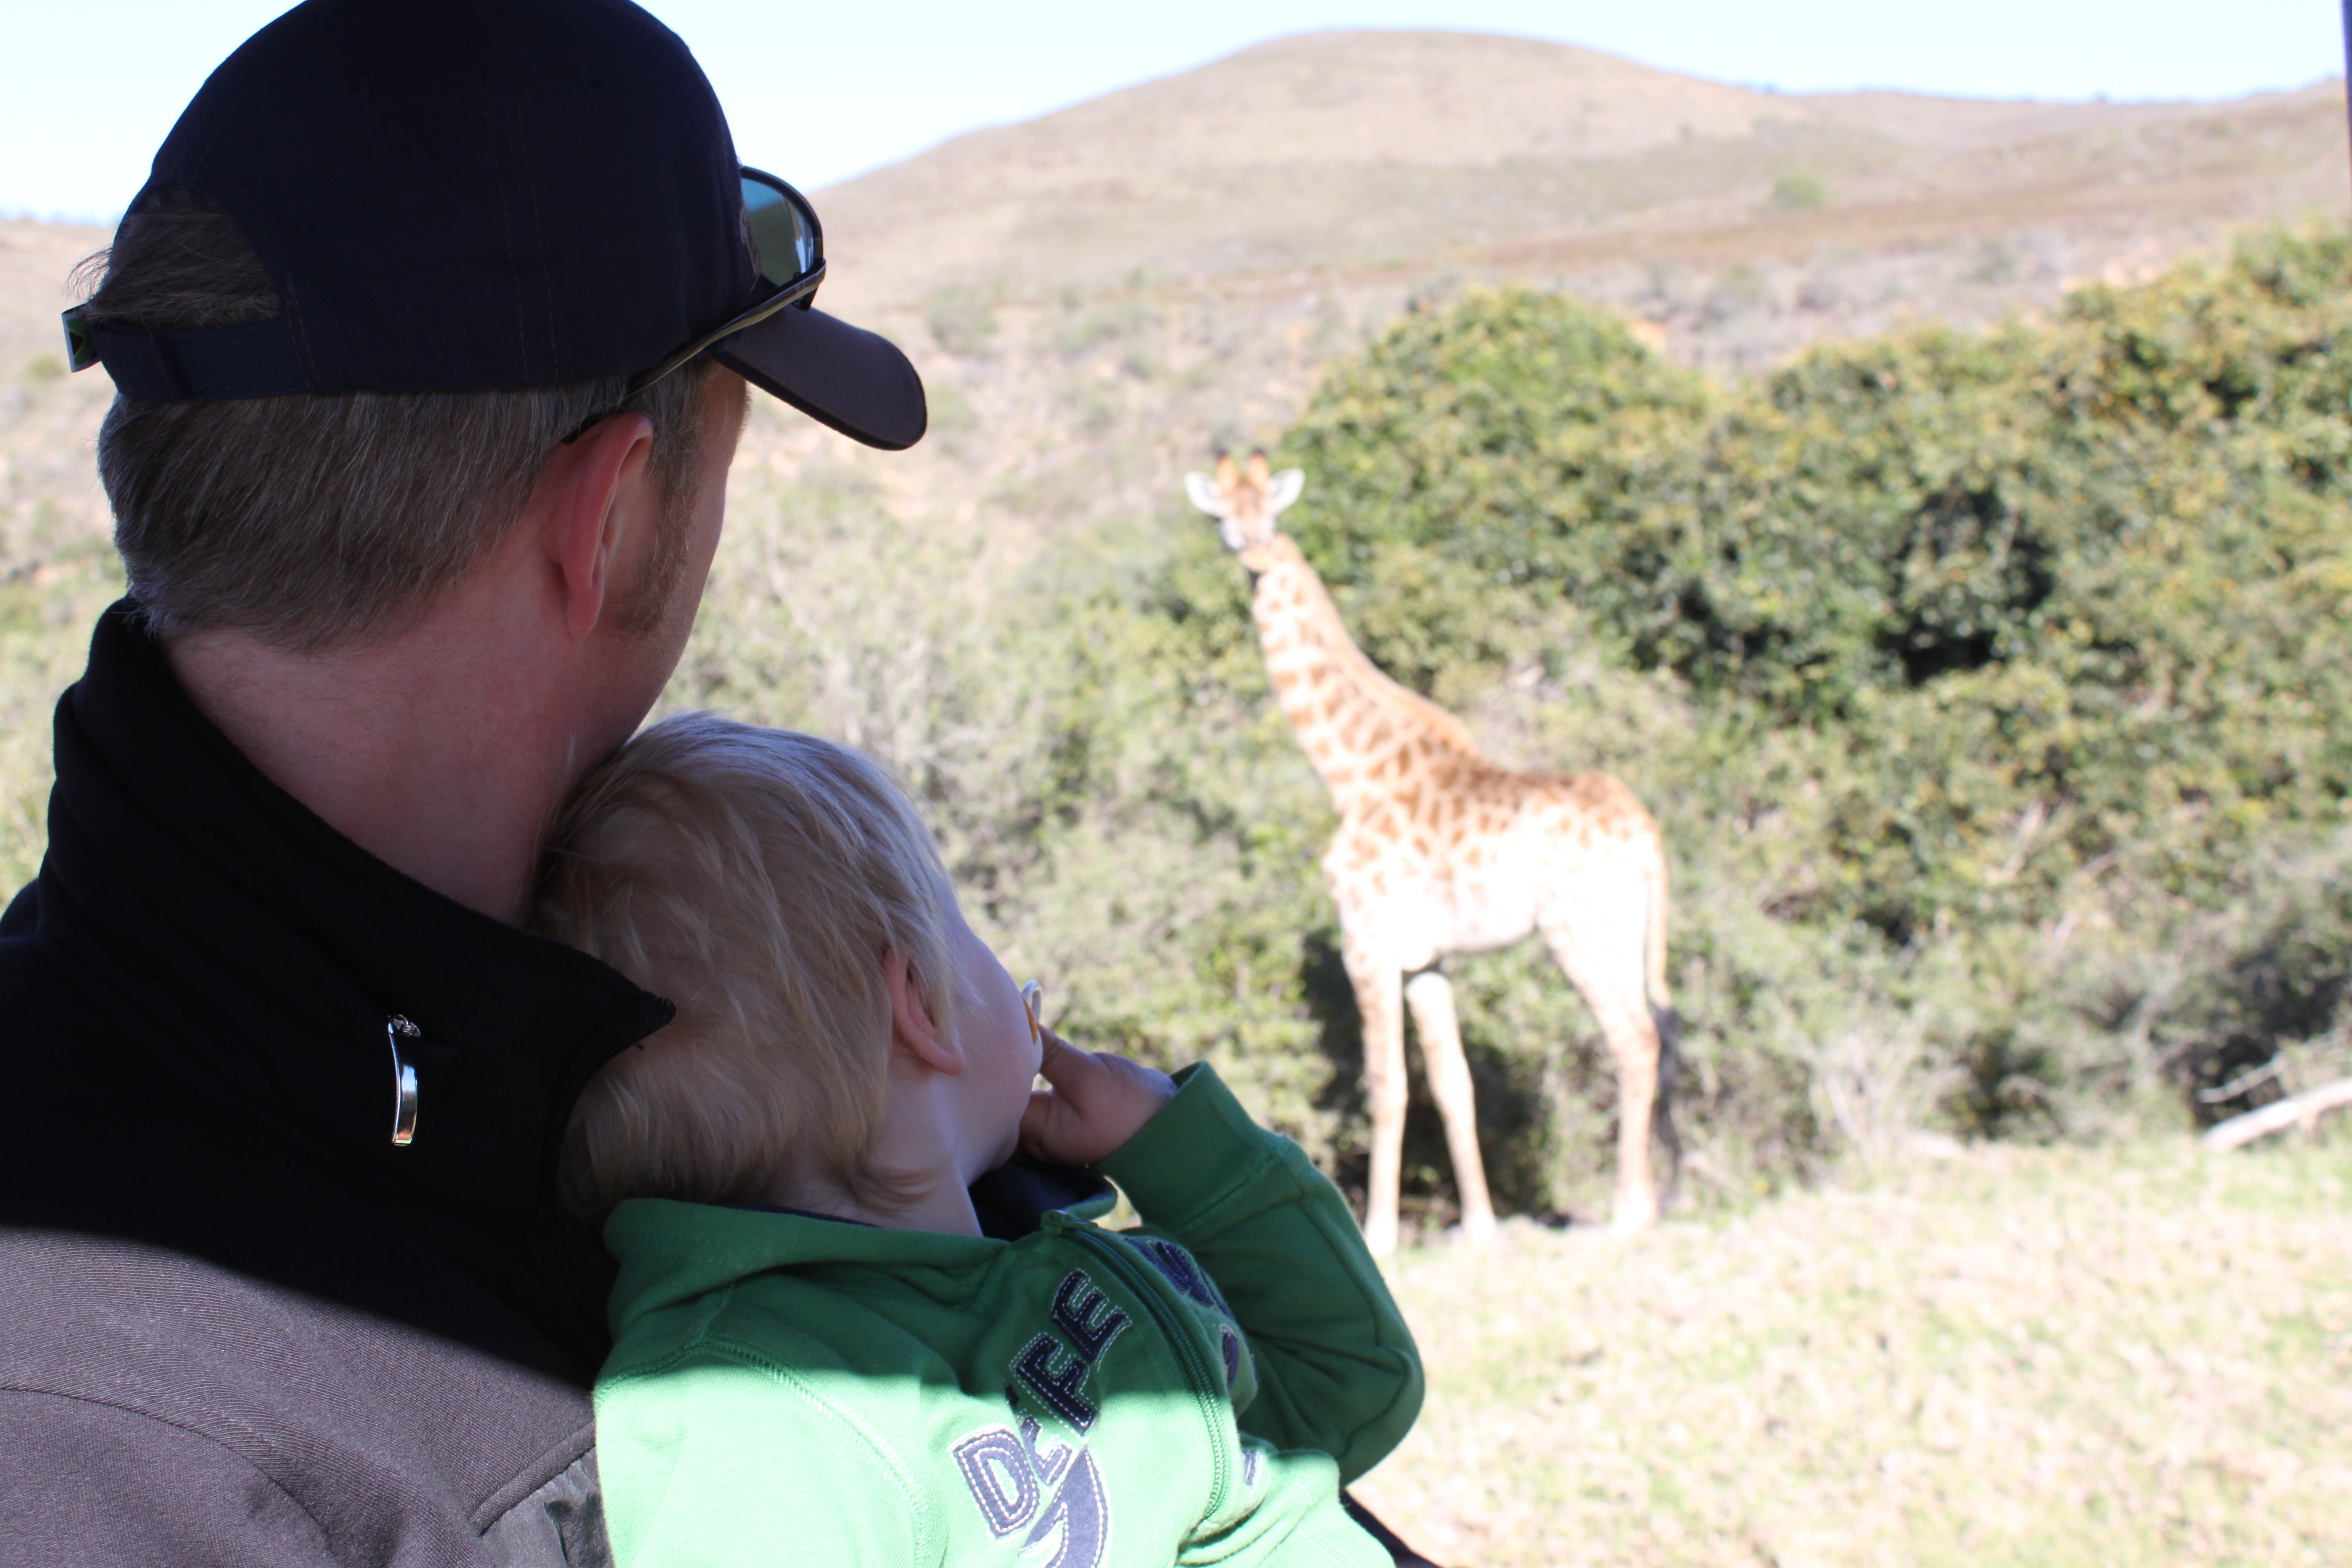 Kind in Südafrika auf Safari mit Giraffe